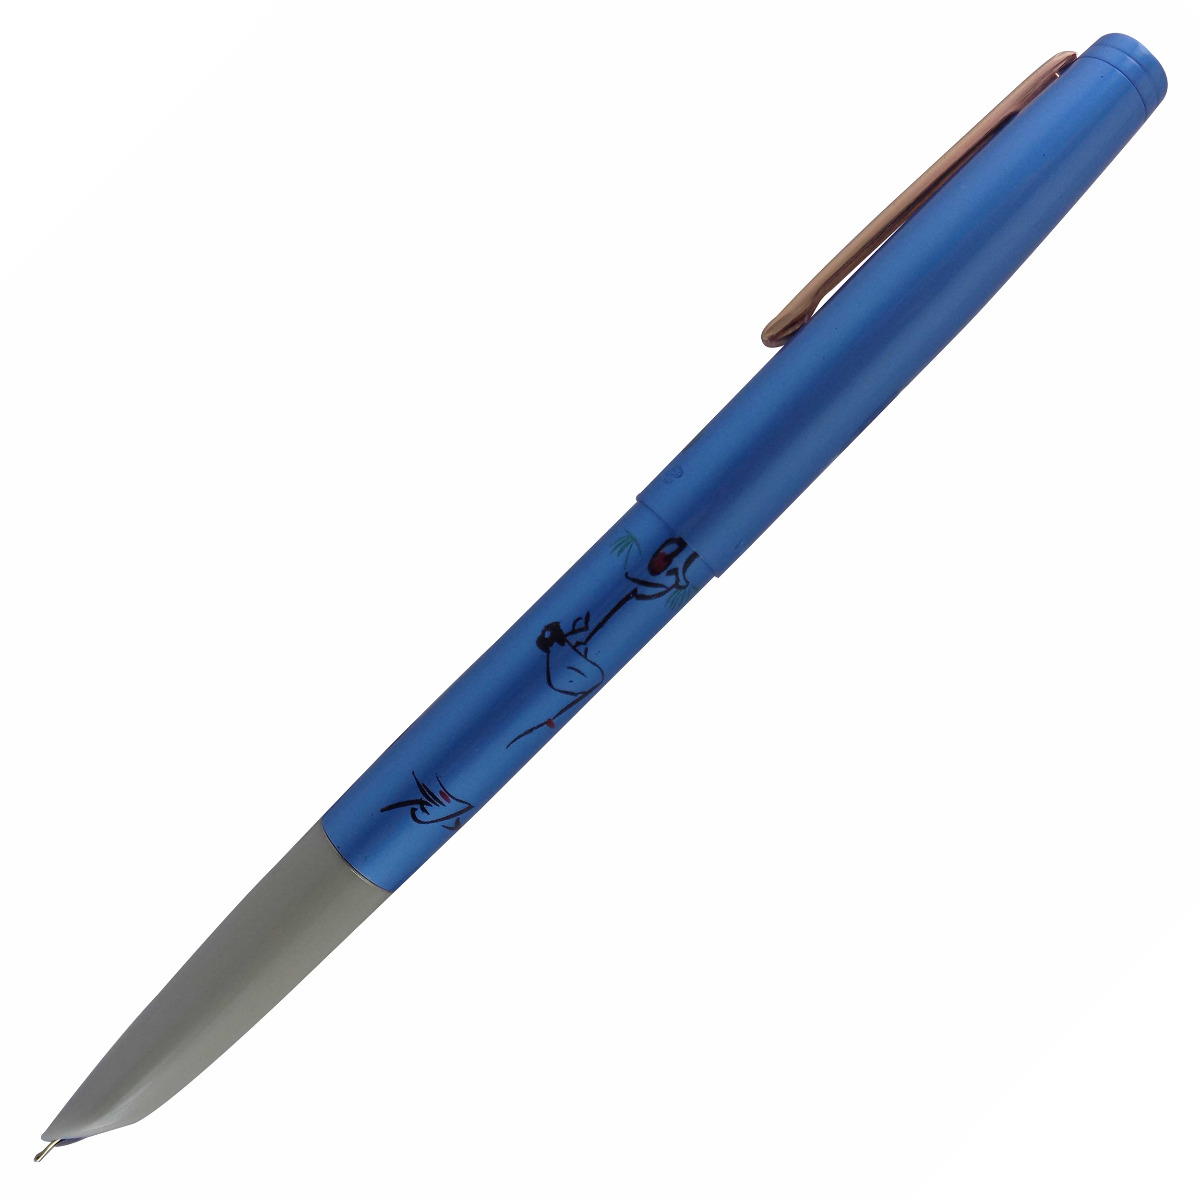 Hero 343 Model: 14518 Blue color body with golden color clip fine tip cap type fountain pen